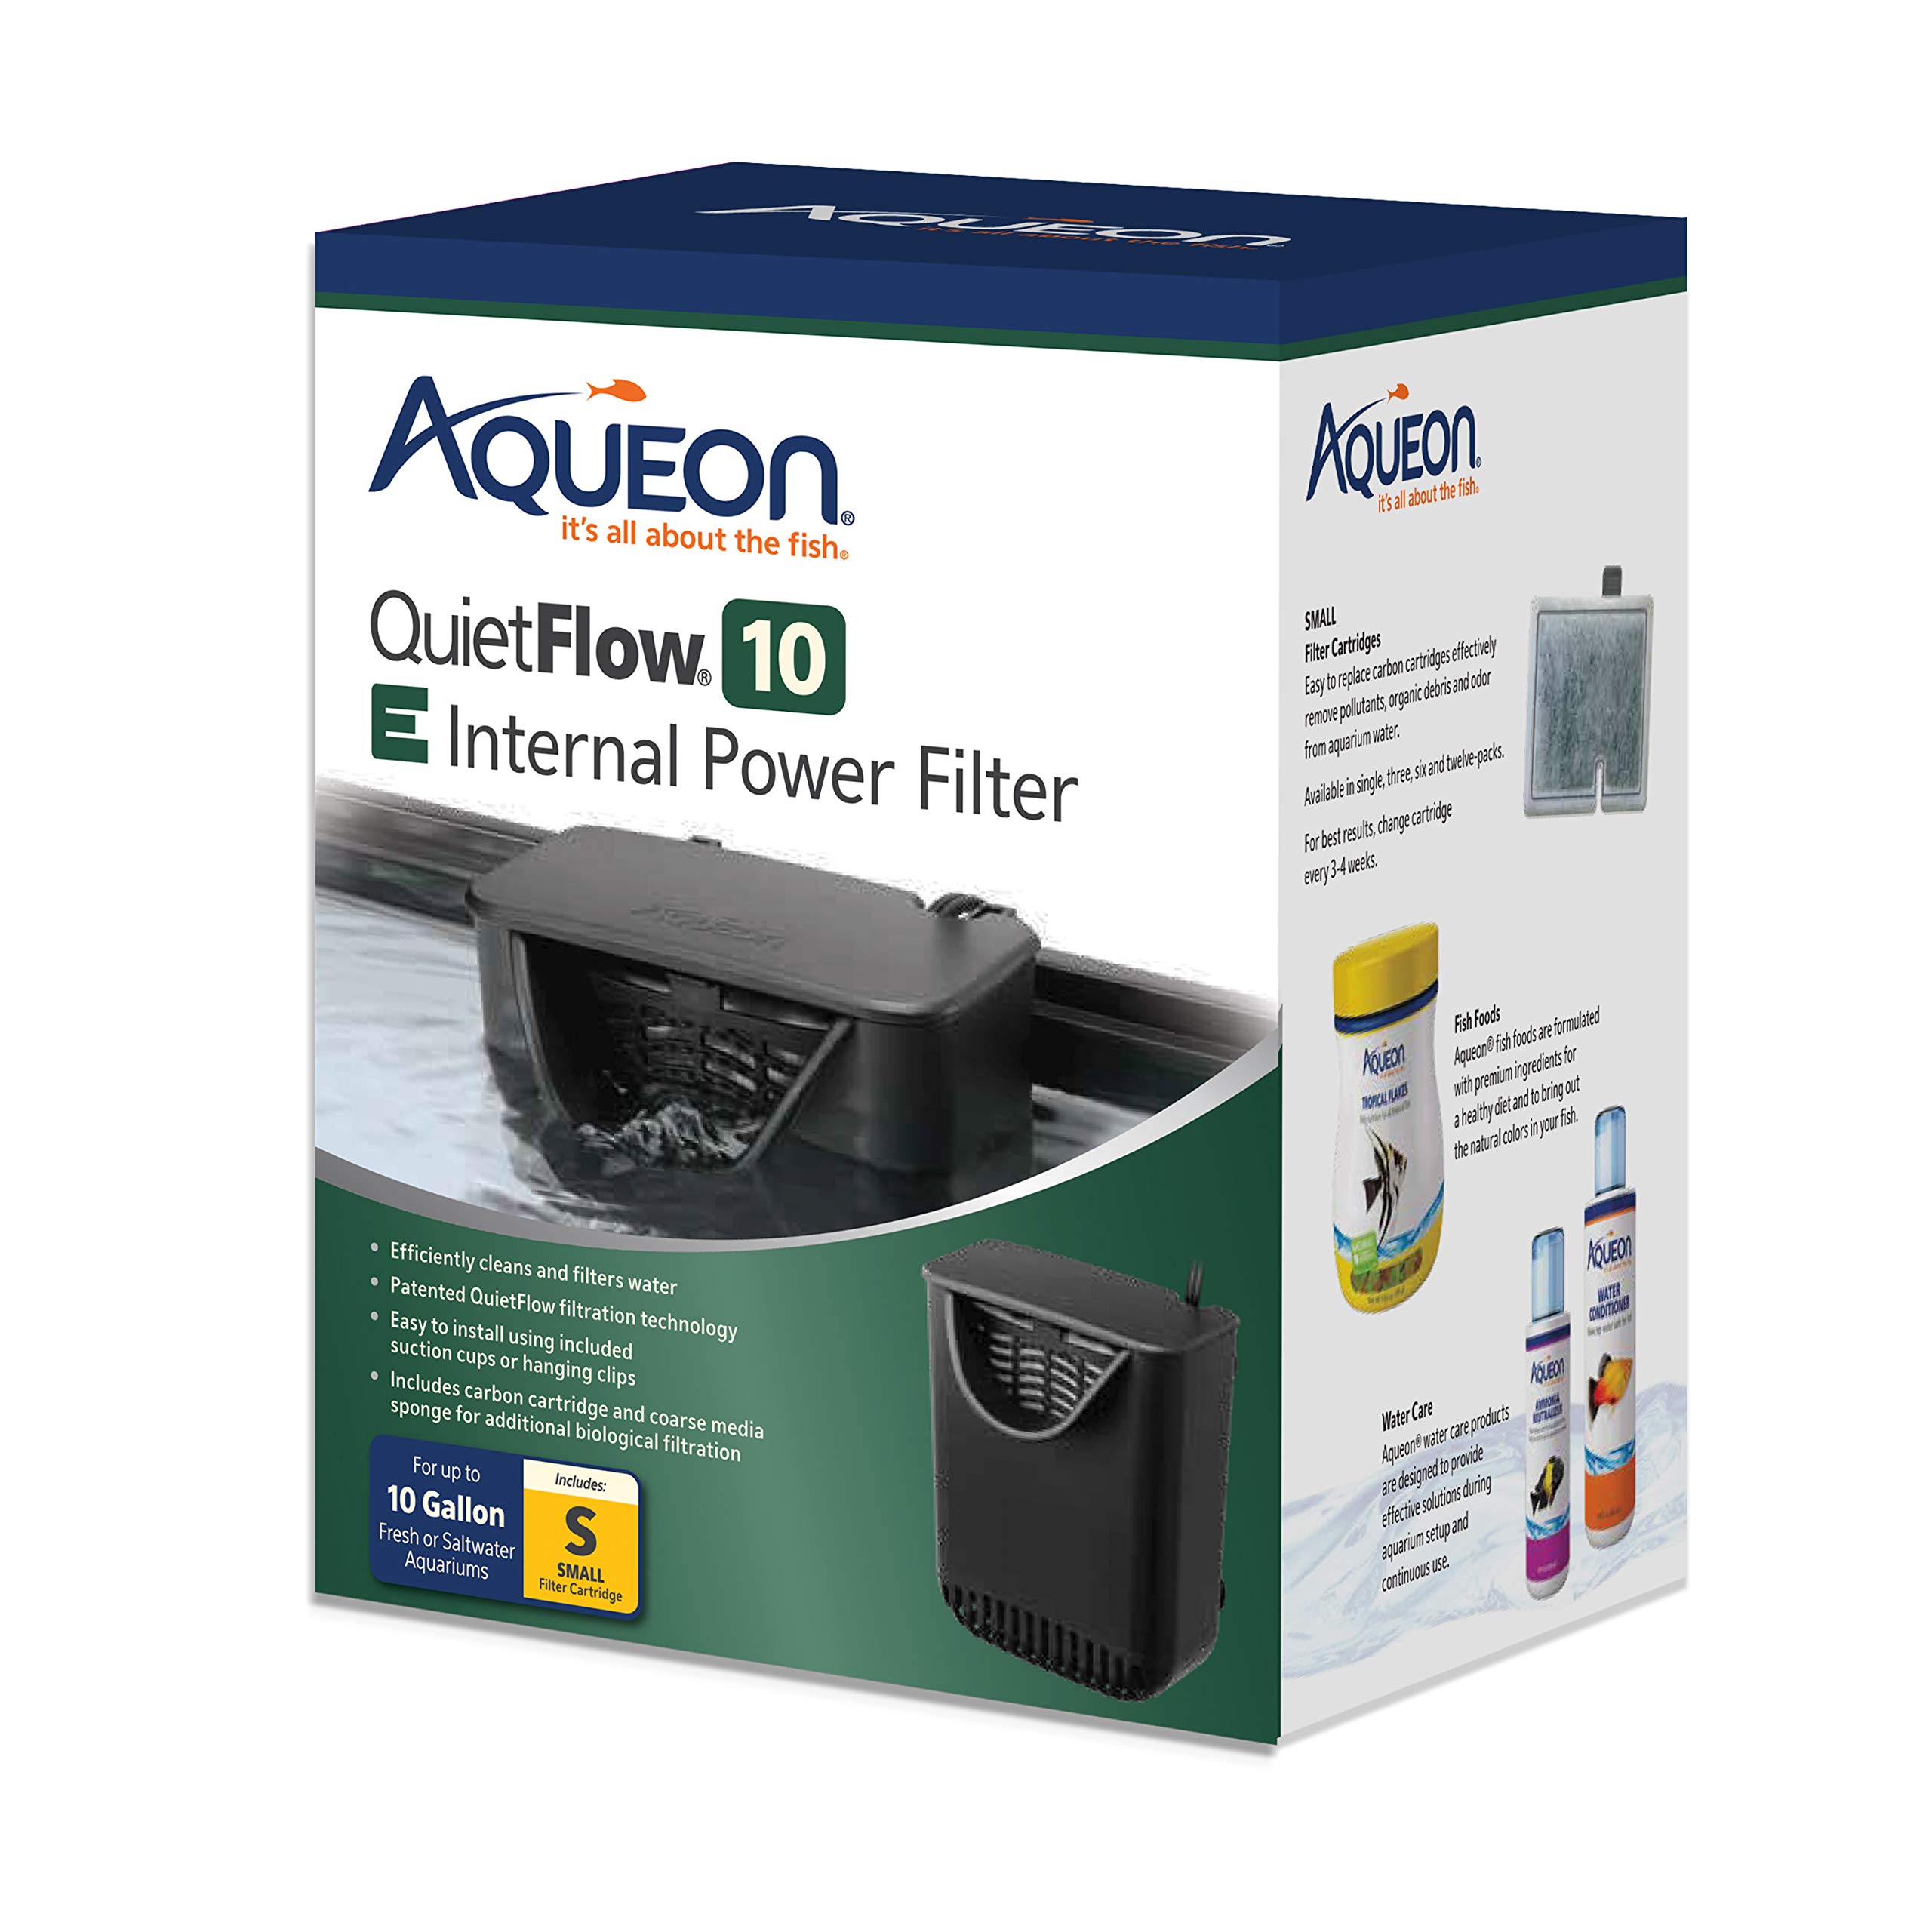 Aqueon QuietFlow 10 E: Small Power Filter for 10 Gallon Fish Tanks.